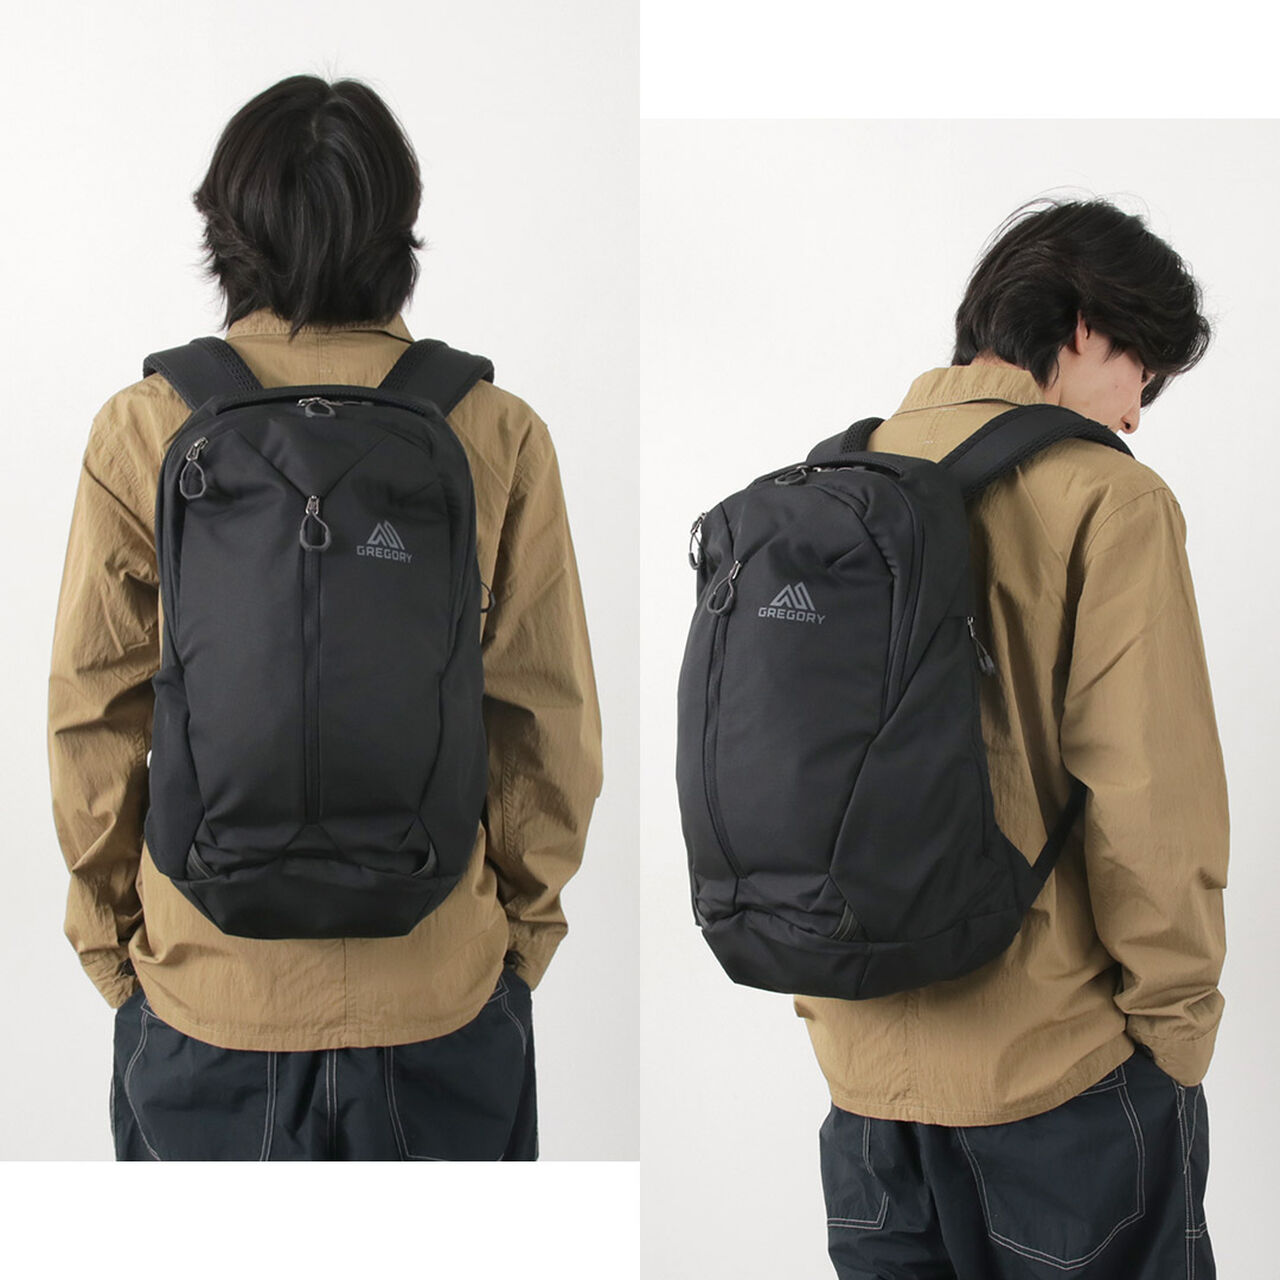 RHUNE 20 backpack,, large image number 3